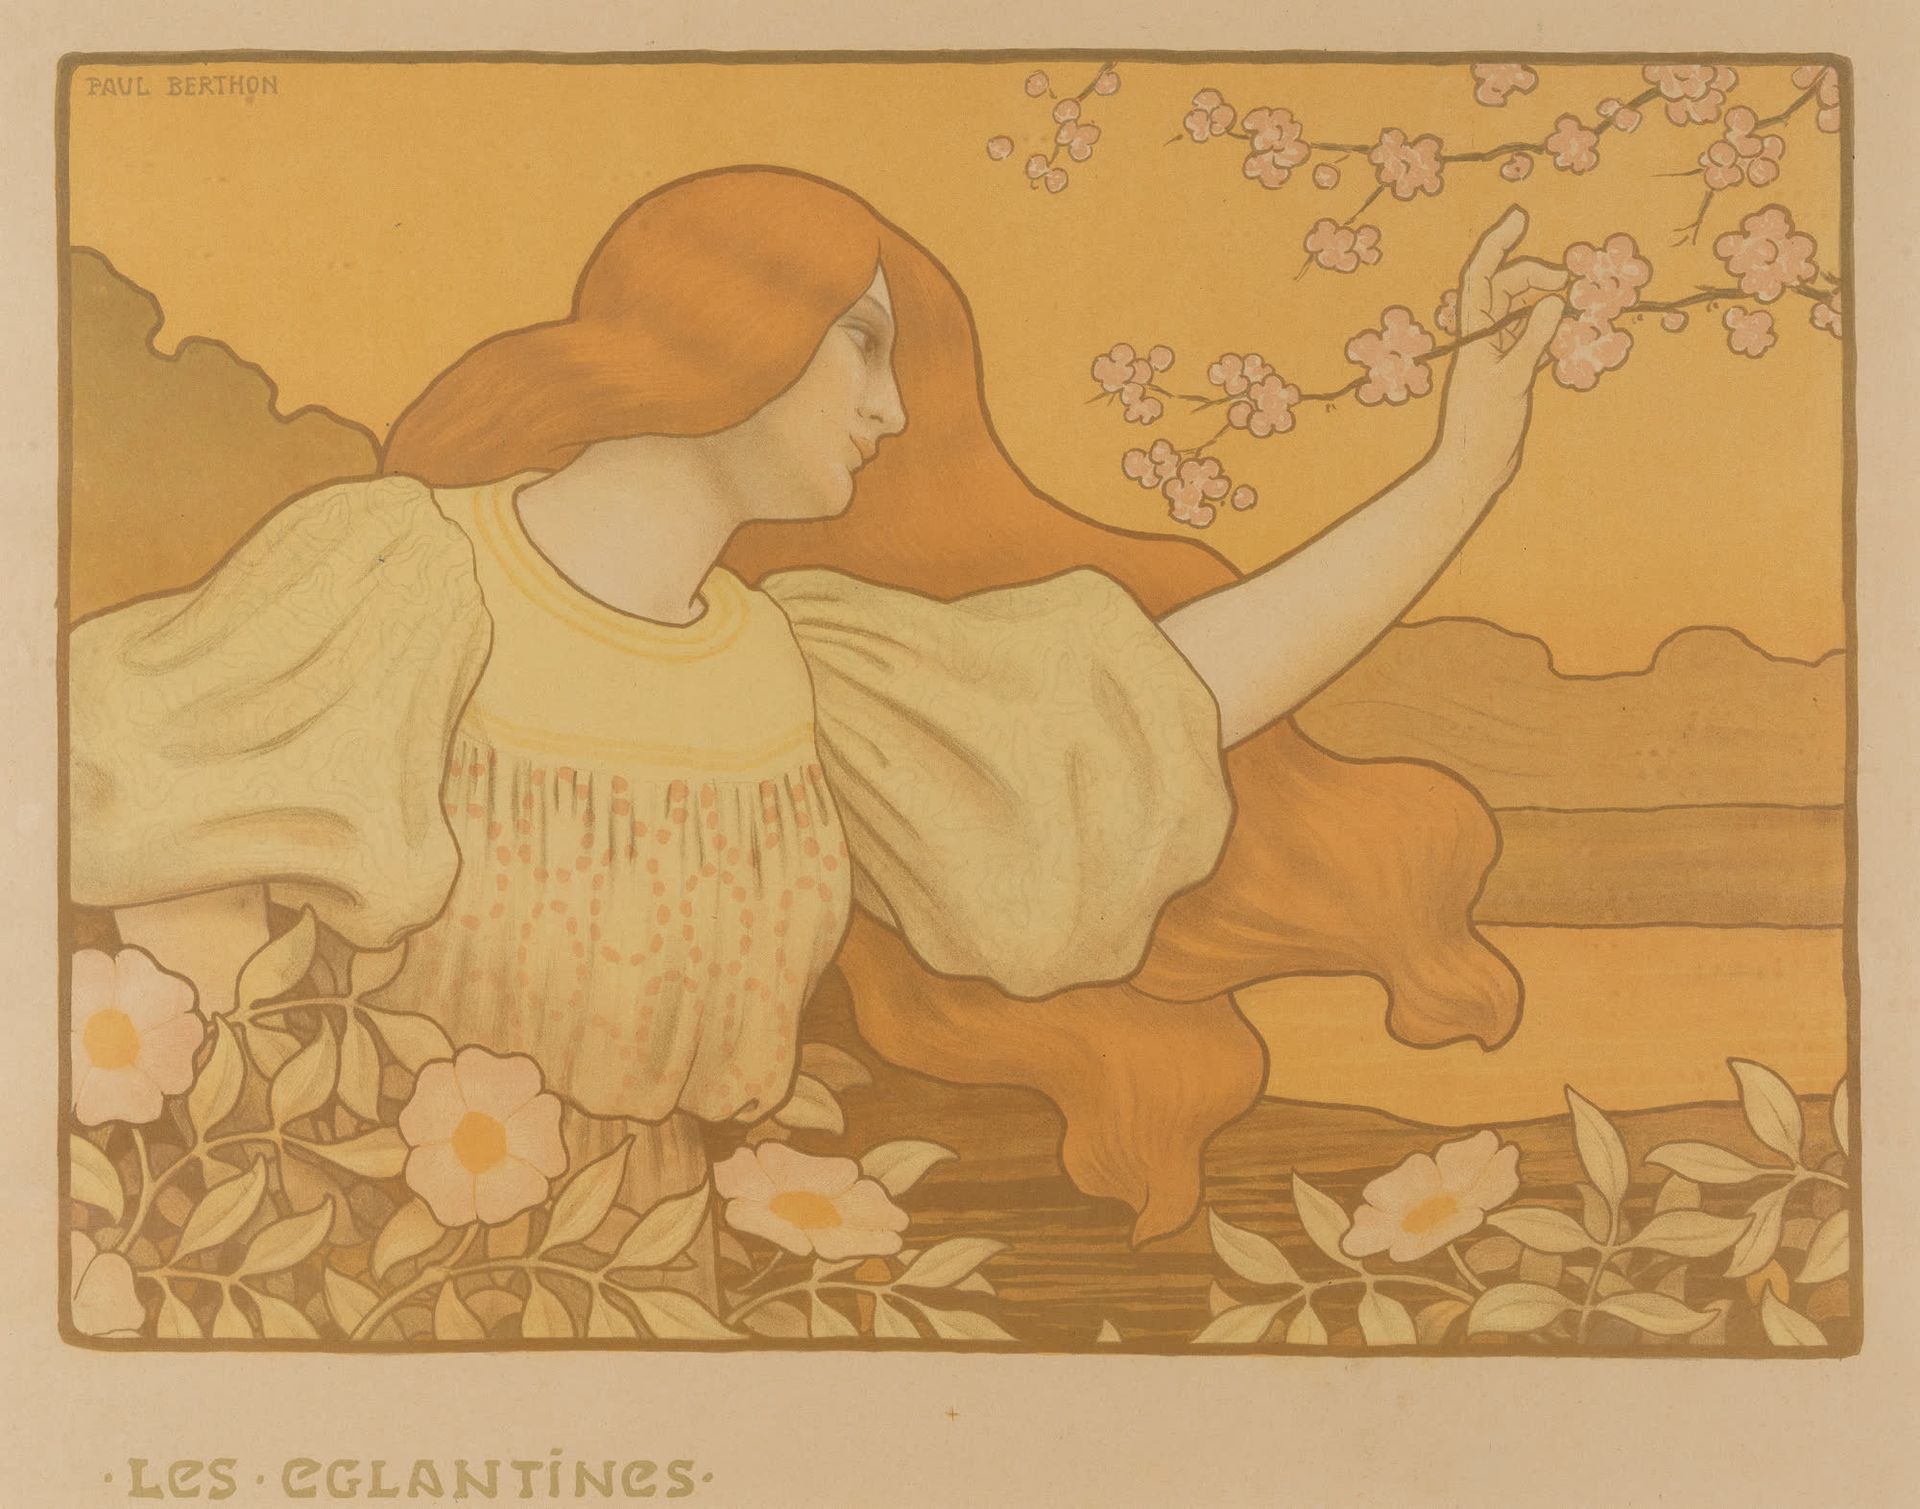 PAUL EMILE BERTHON (1946-1909) Les Eglantines, 1900.
牛皮纸上的彩色石版画。
在版上签名。
Lithogra&hellip;